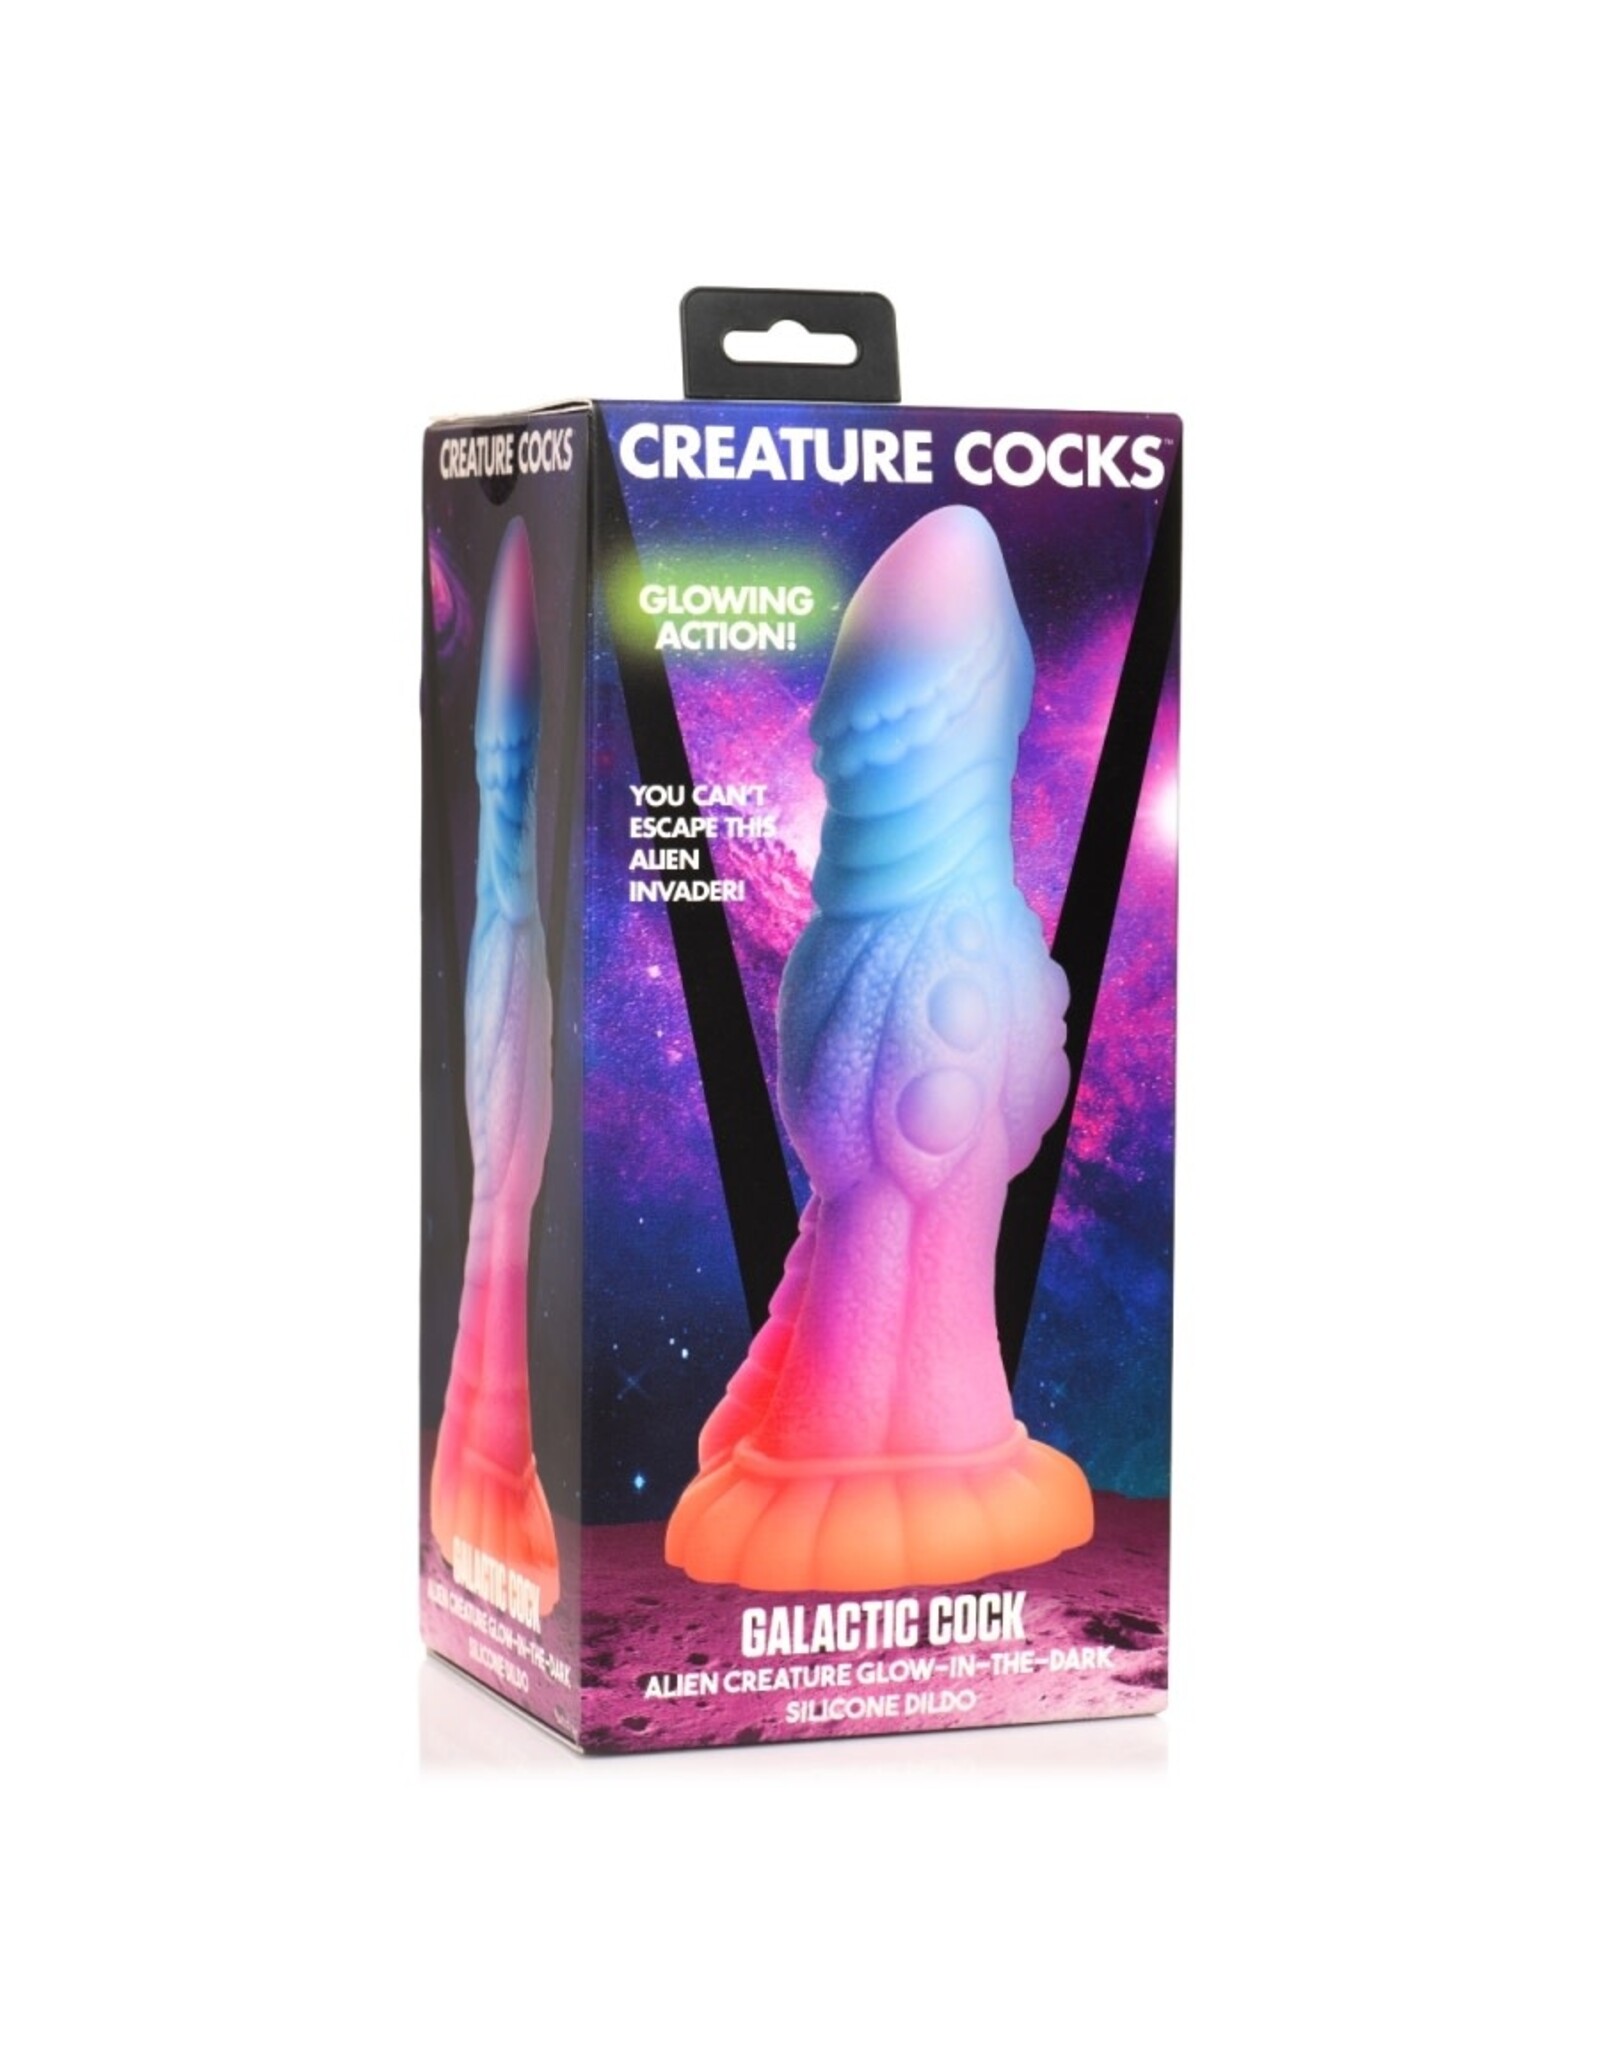 XR Brands Creature Cocks - Galactic Cock Alien Creature Glow-in-the-Dark Silicone Dildo